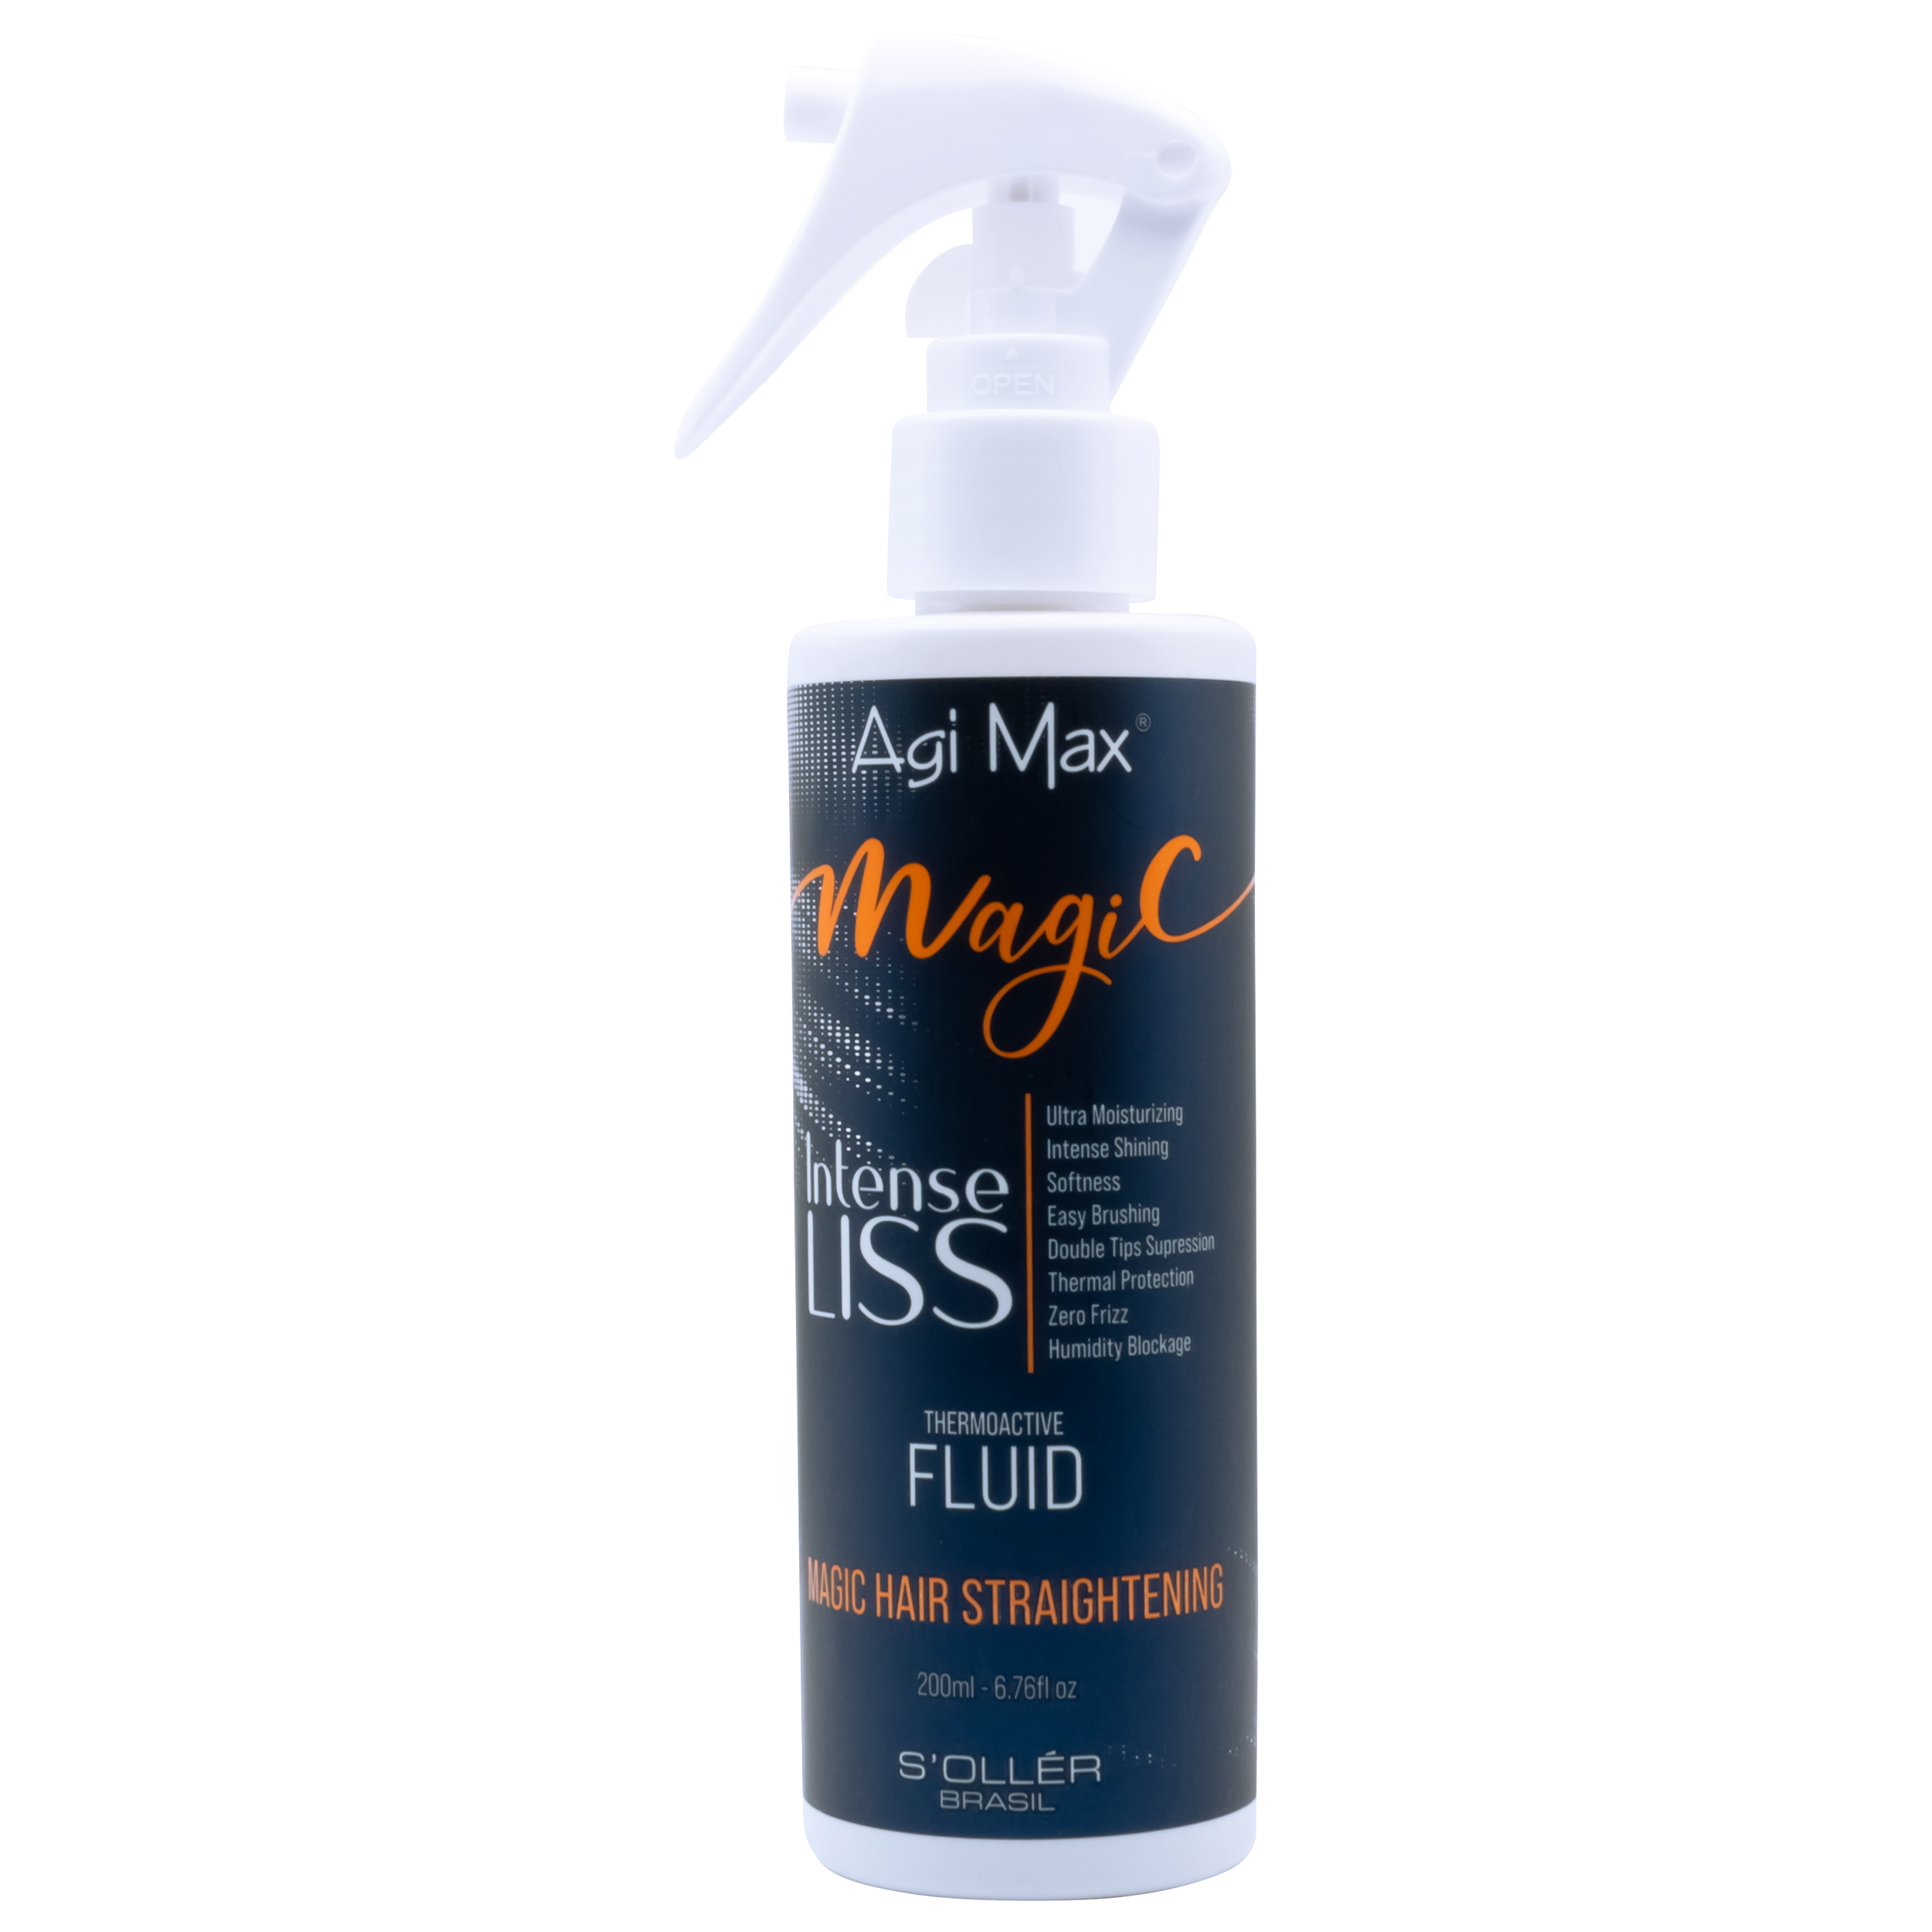 Produto Agi Max Magic Liss Thermo Activ Fluid | Coleção Magic Liss